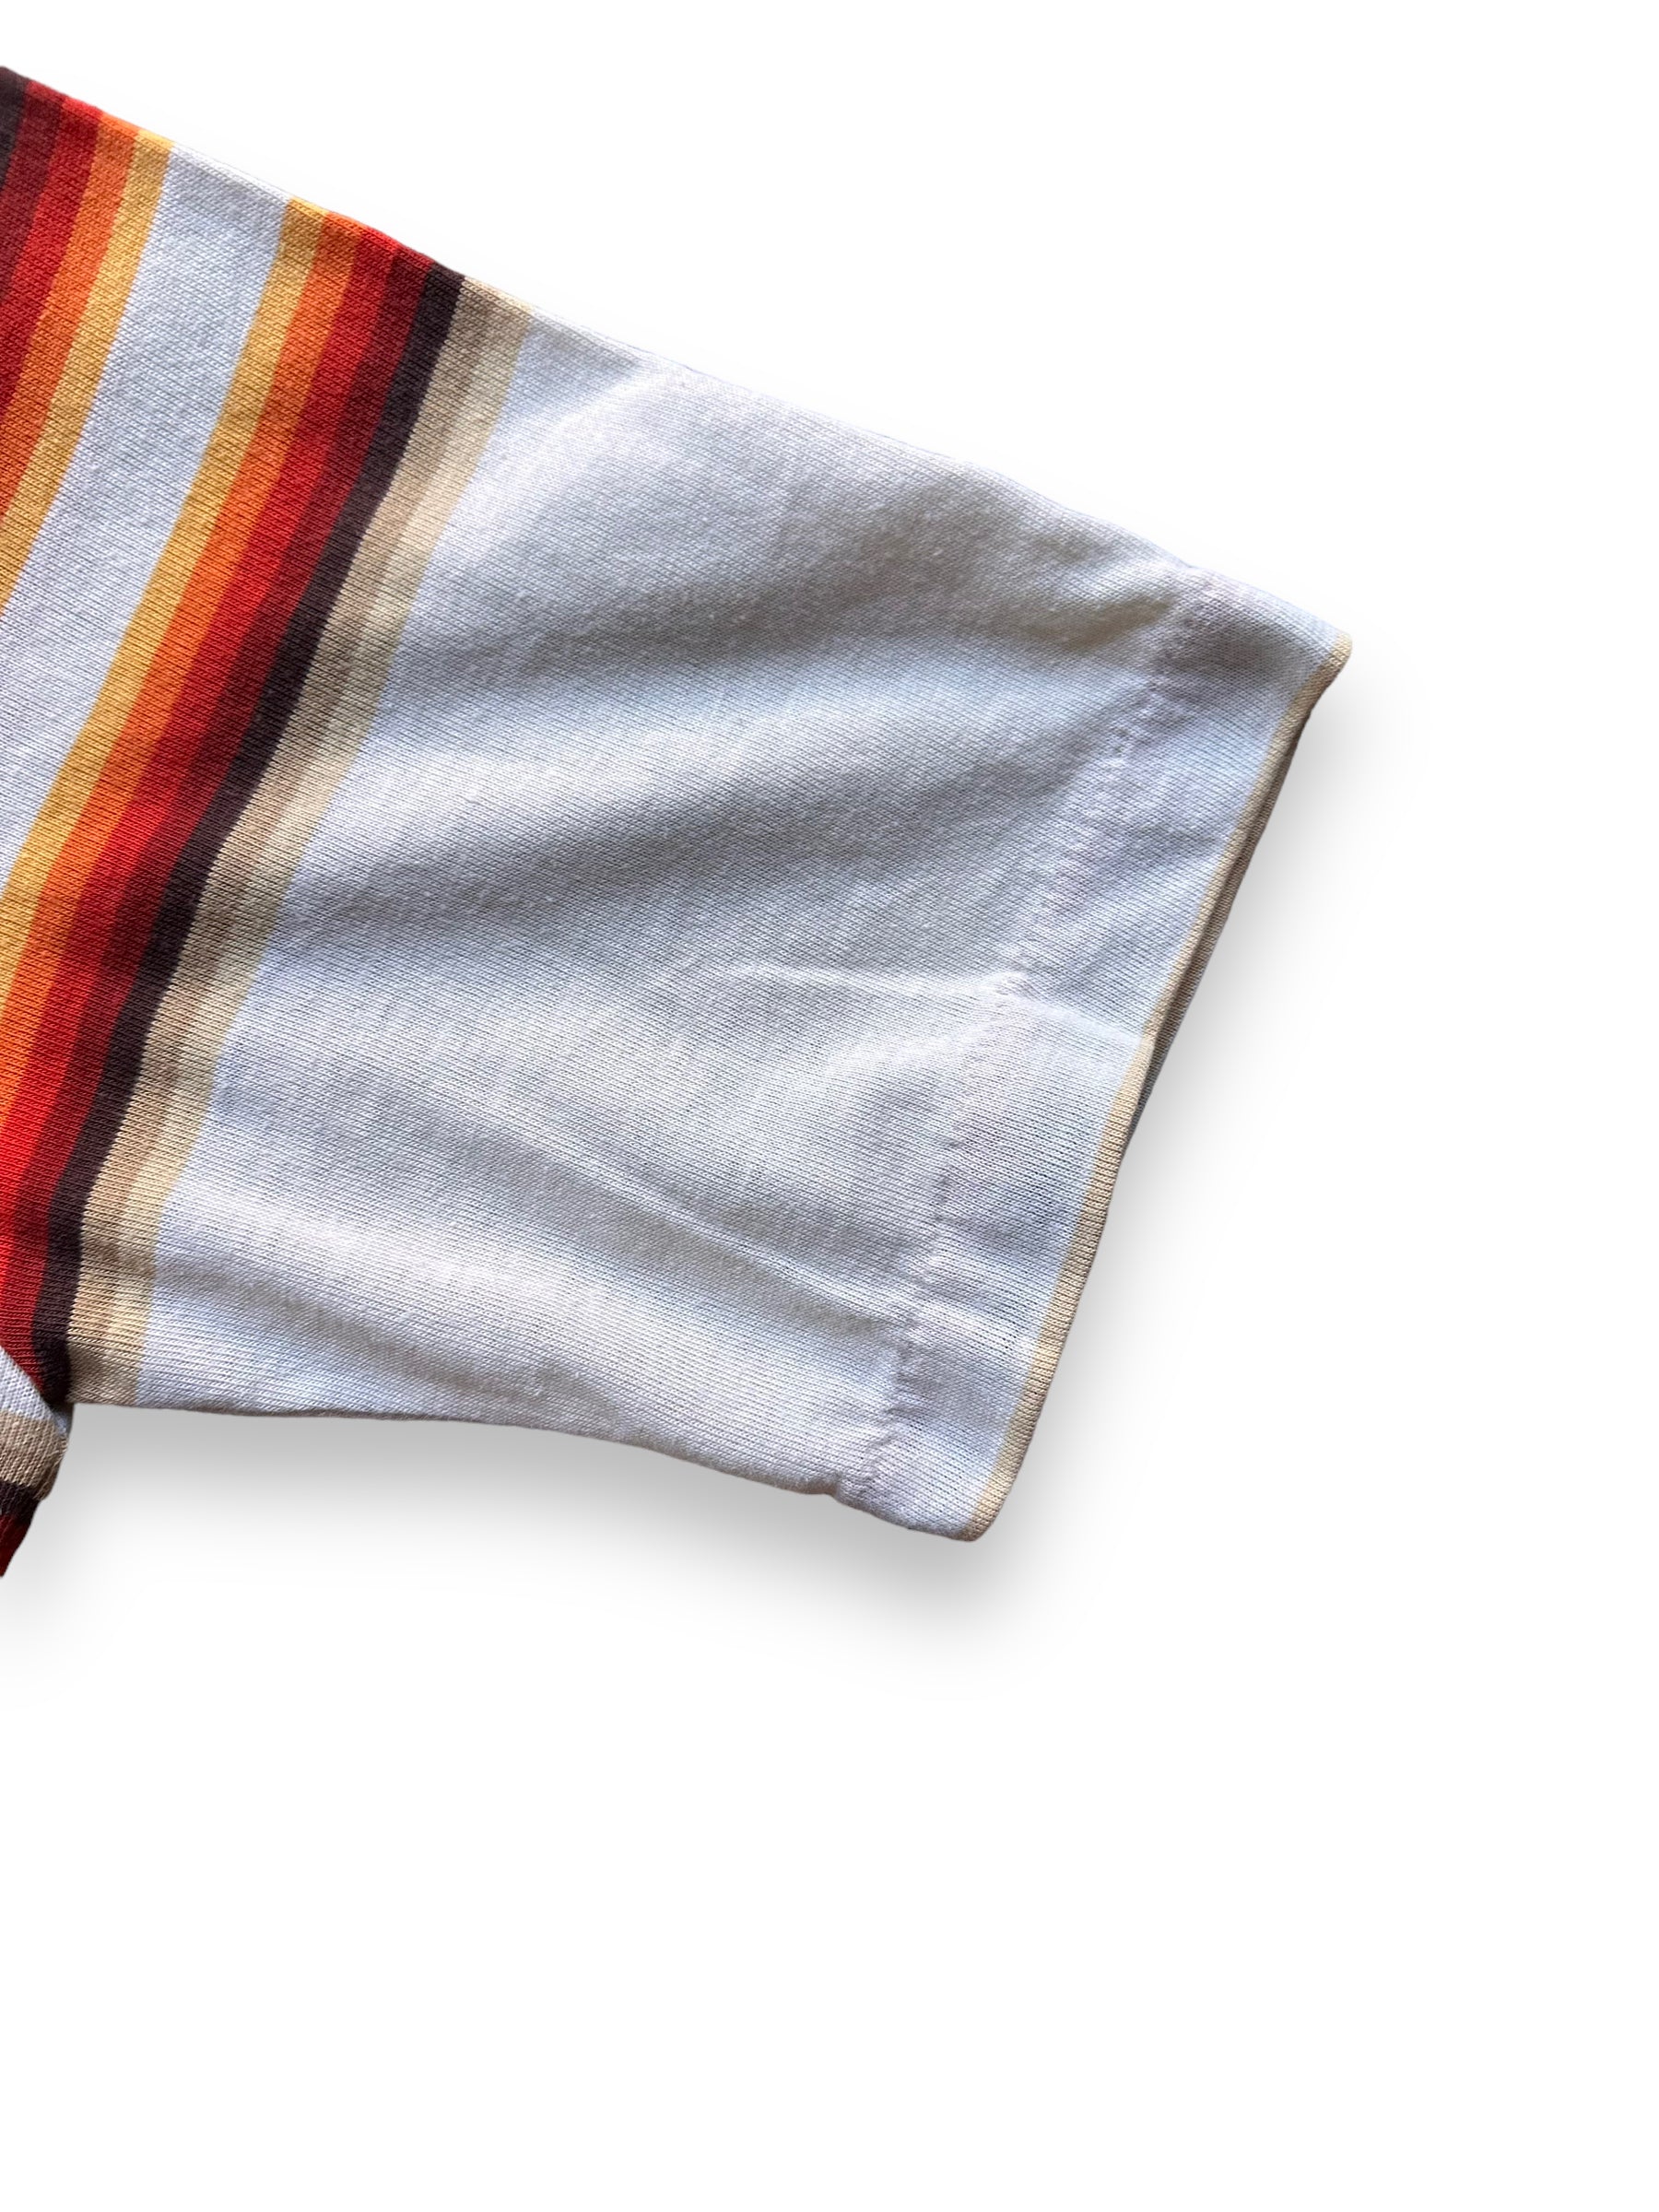 Left Sleeve View of Vintage Jantzen Striped Shirt SZ M | Vintage Striped Shirt Seattle | Barn Owl Vintage Seattle